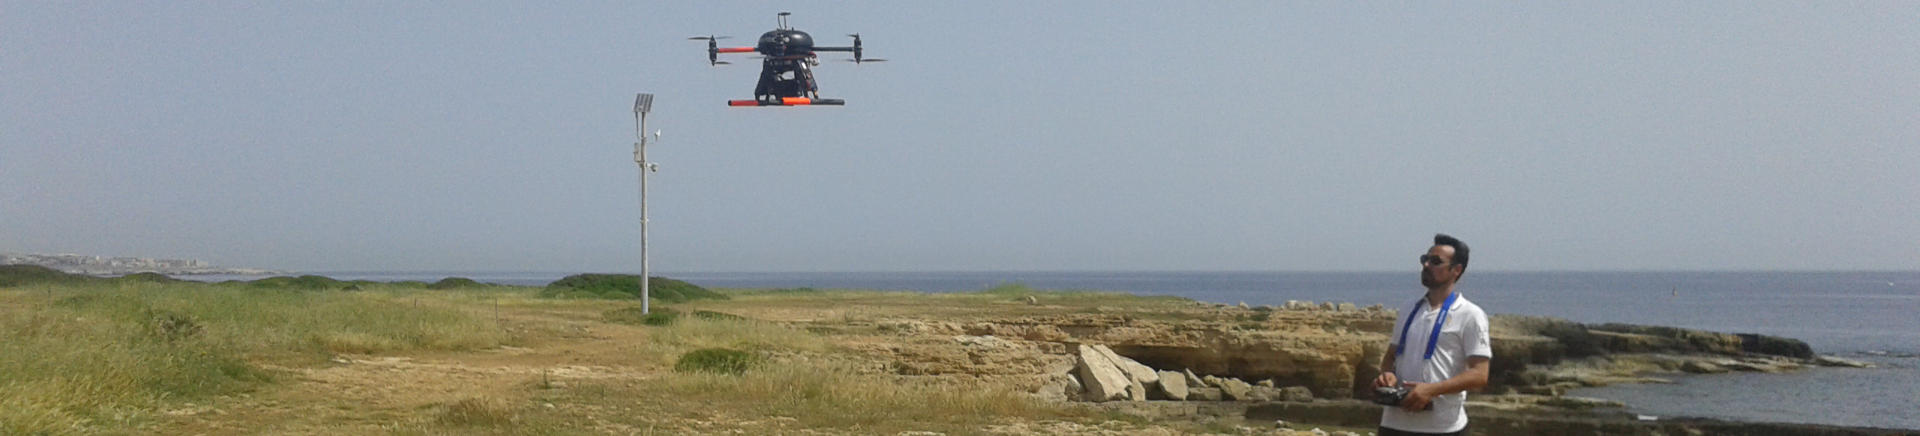 Surveys with Aerial Drones